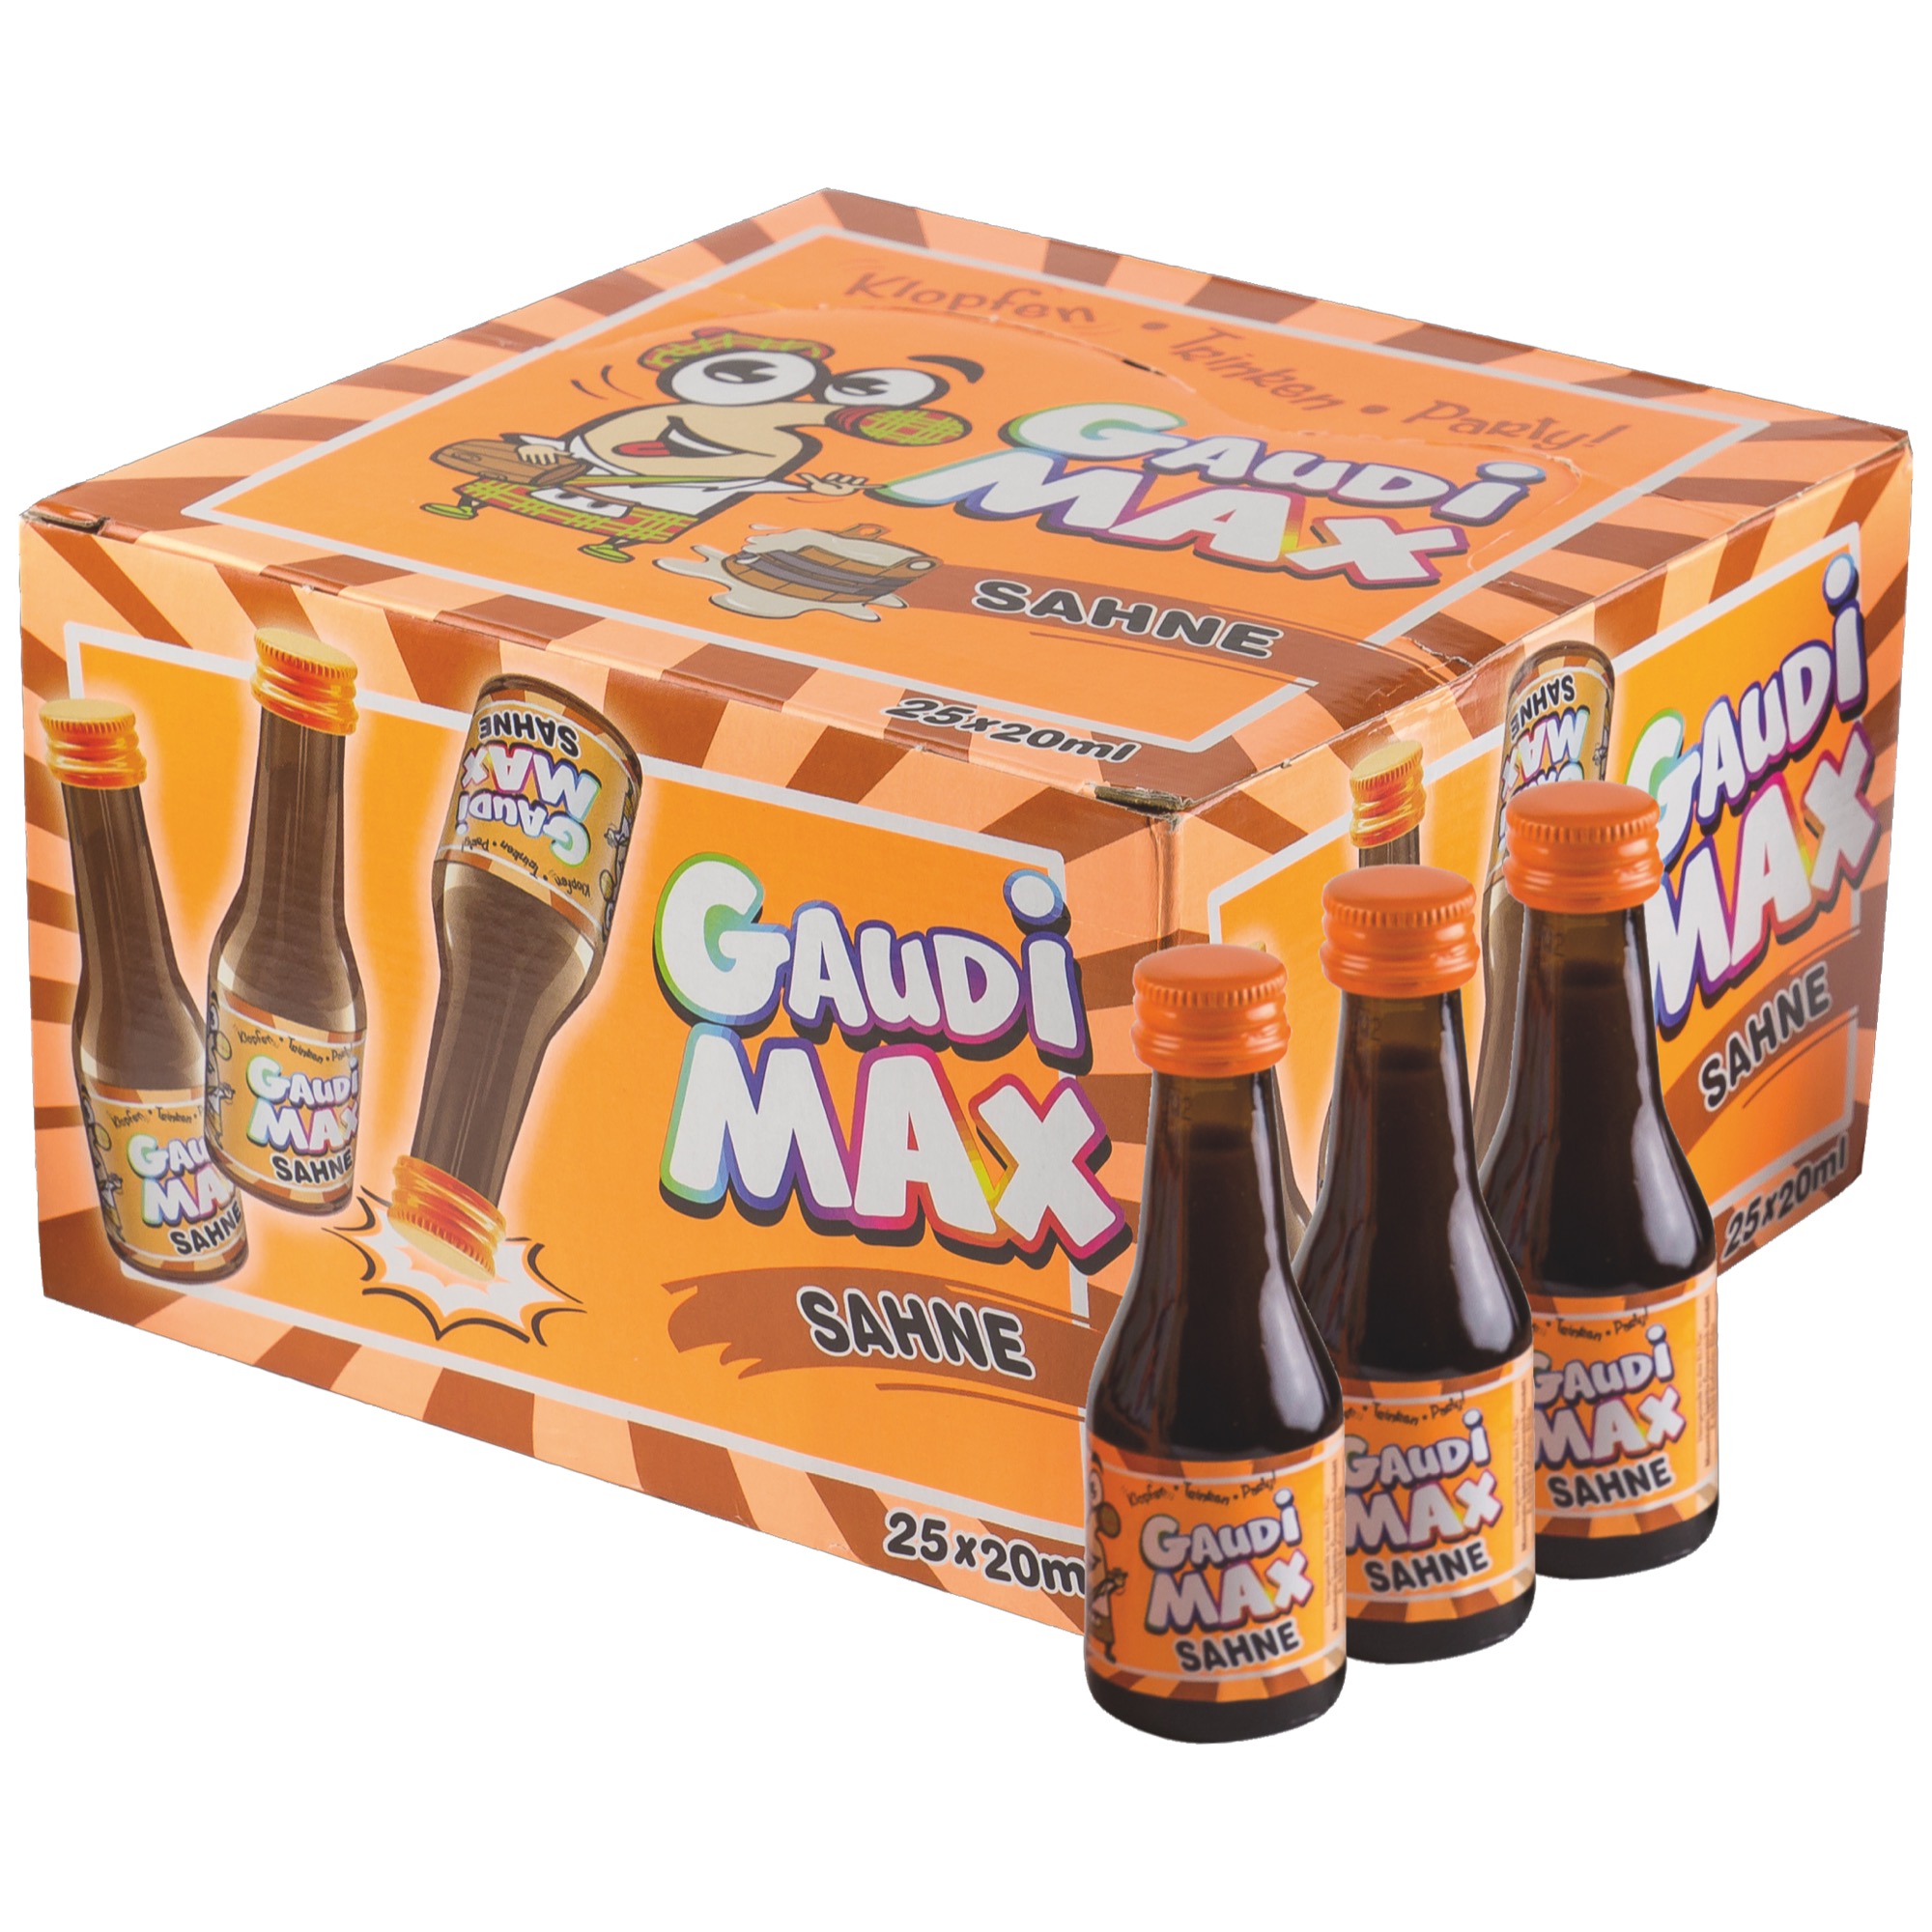 Gaudimax 25x20ml, whisky-smotana